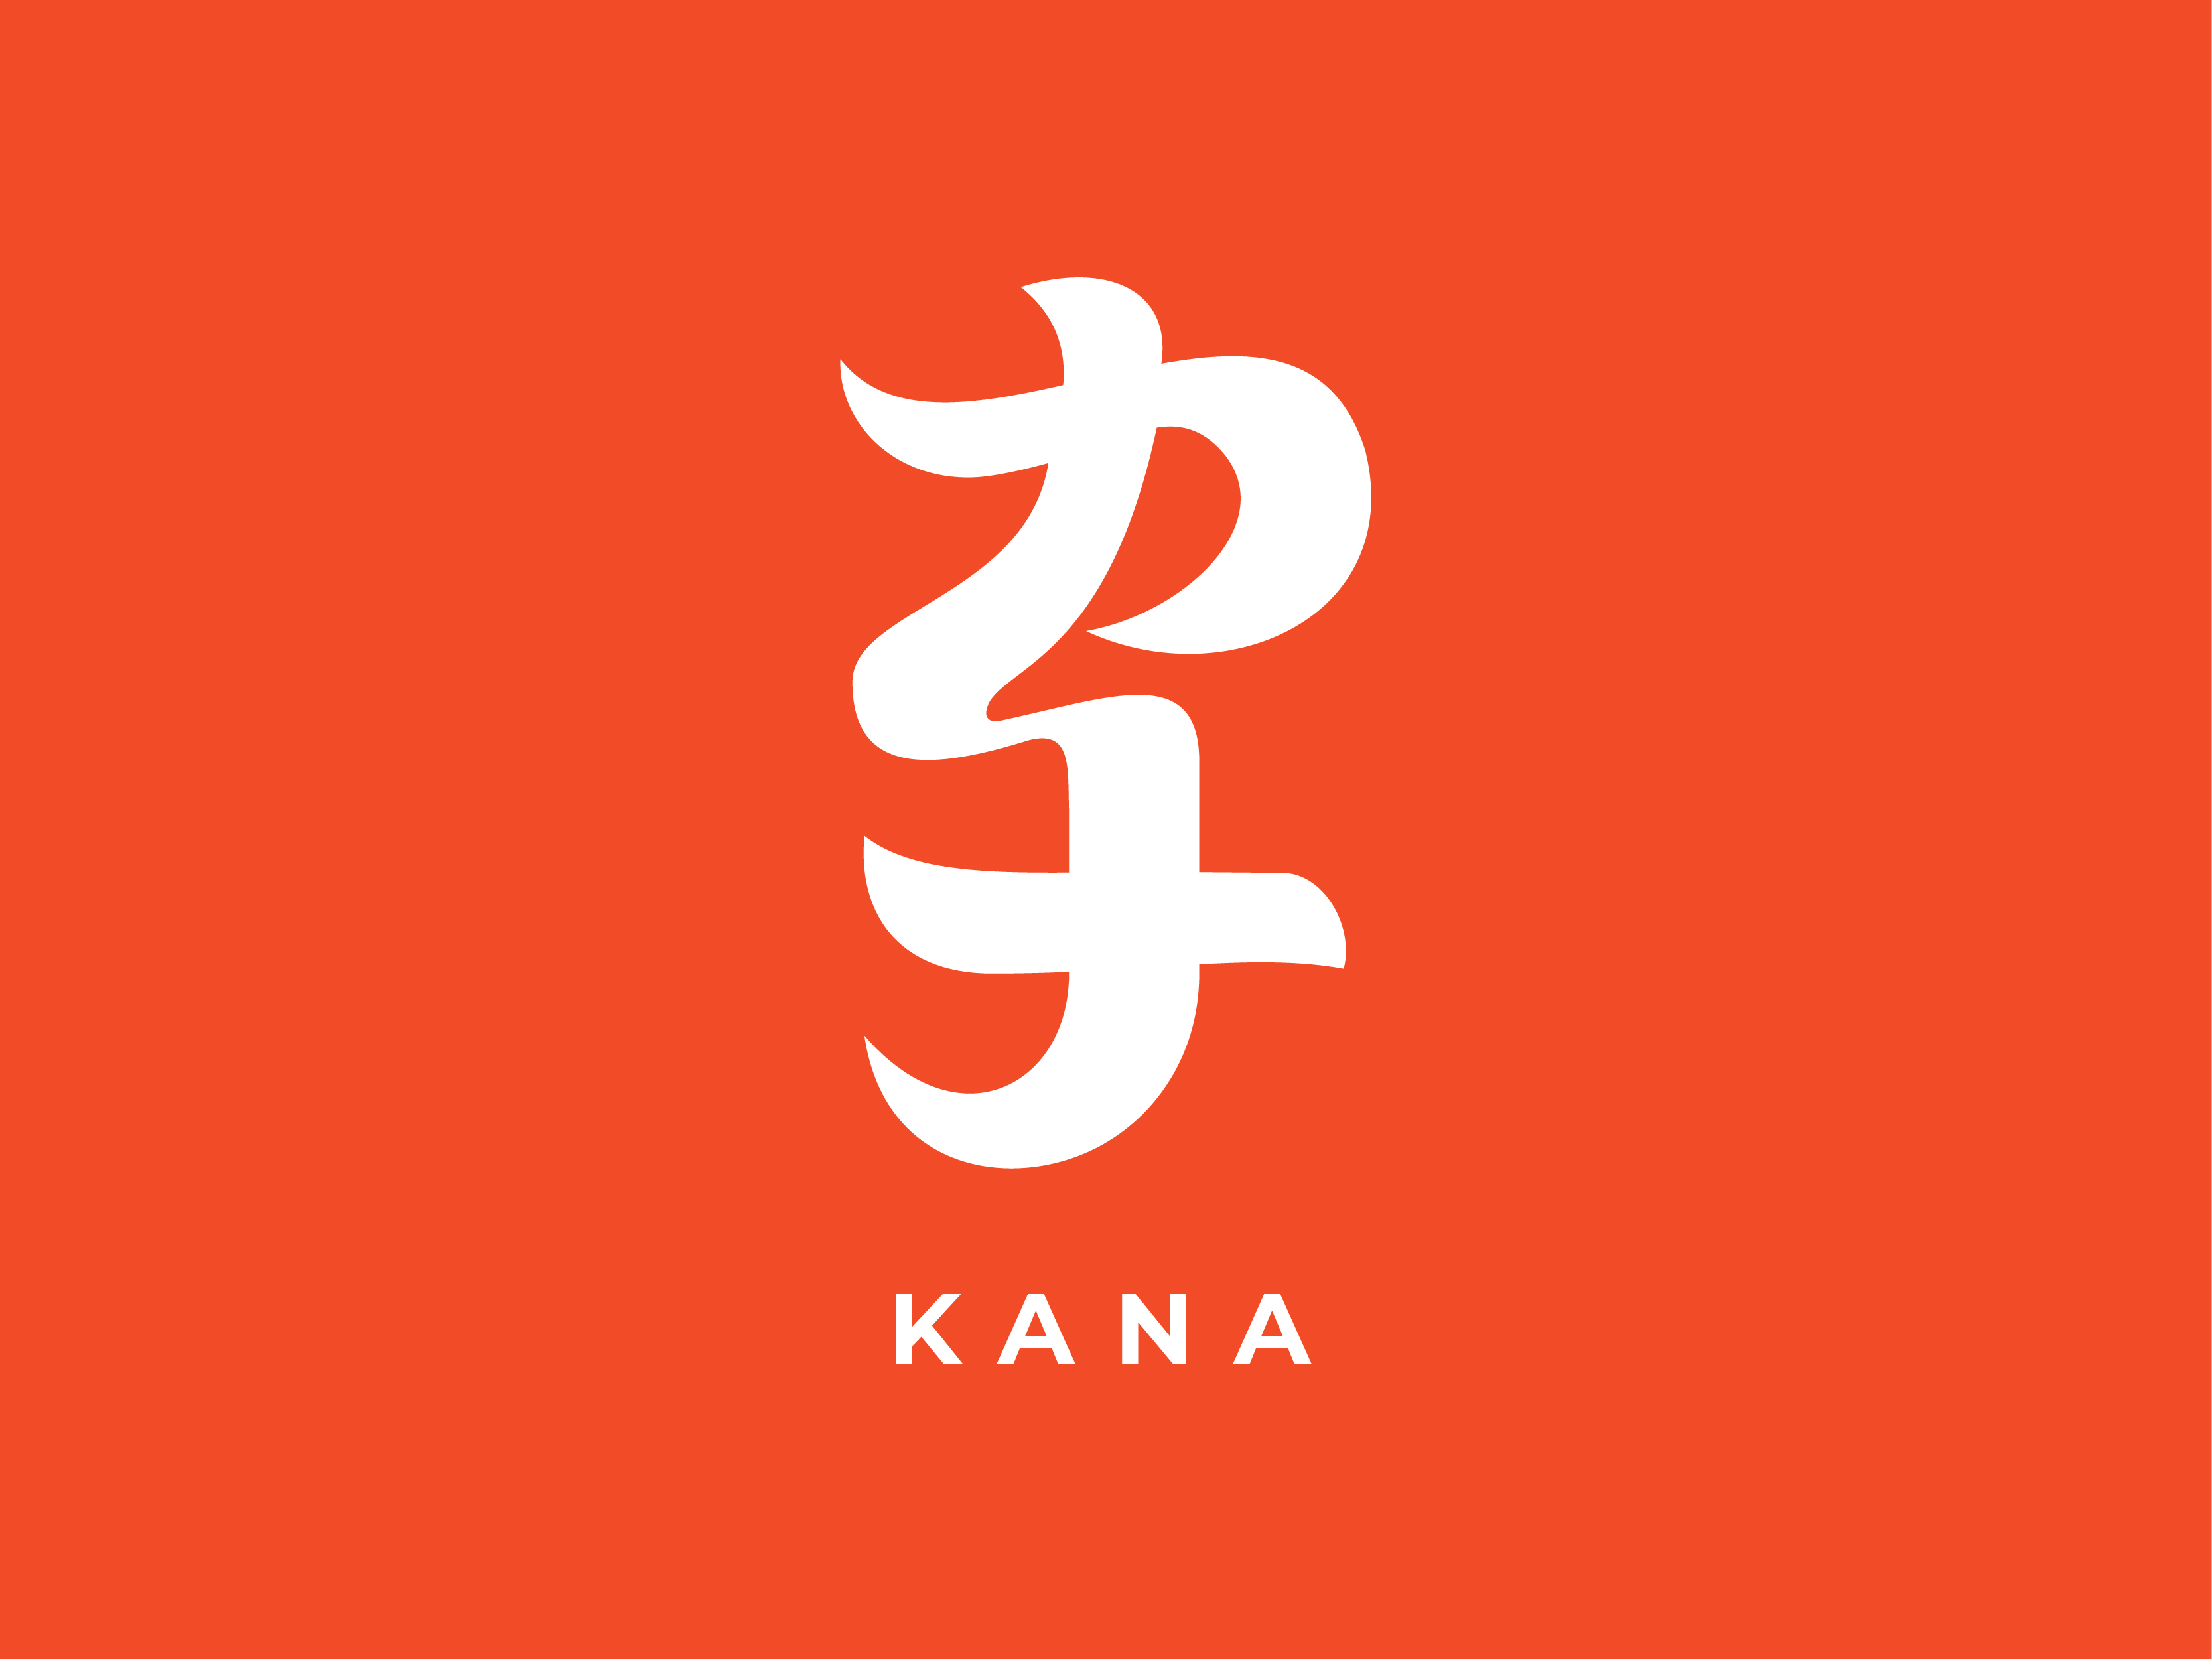 Kana japanese logo concept.